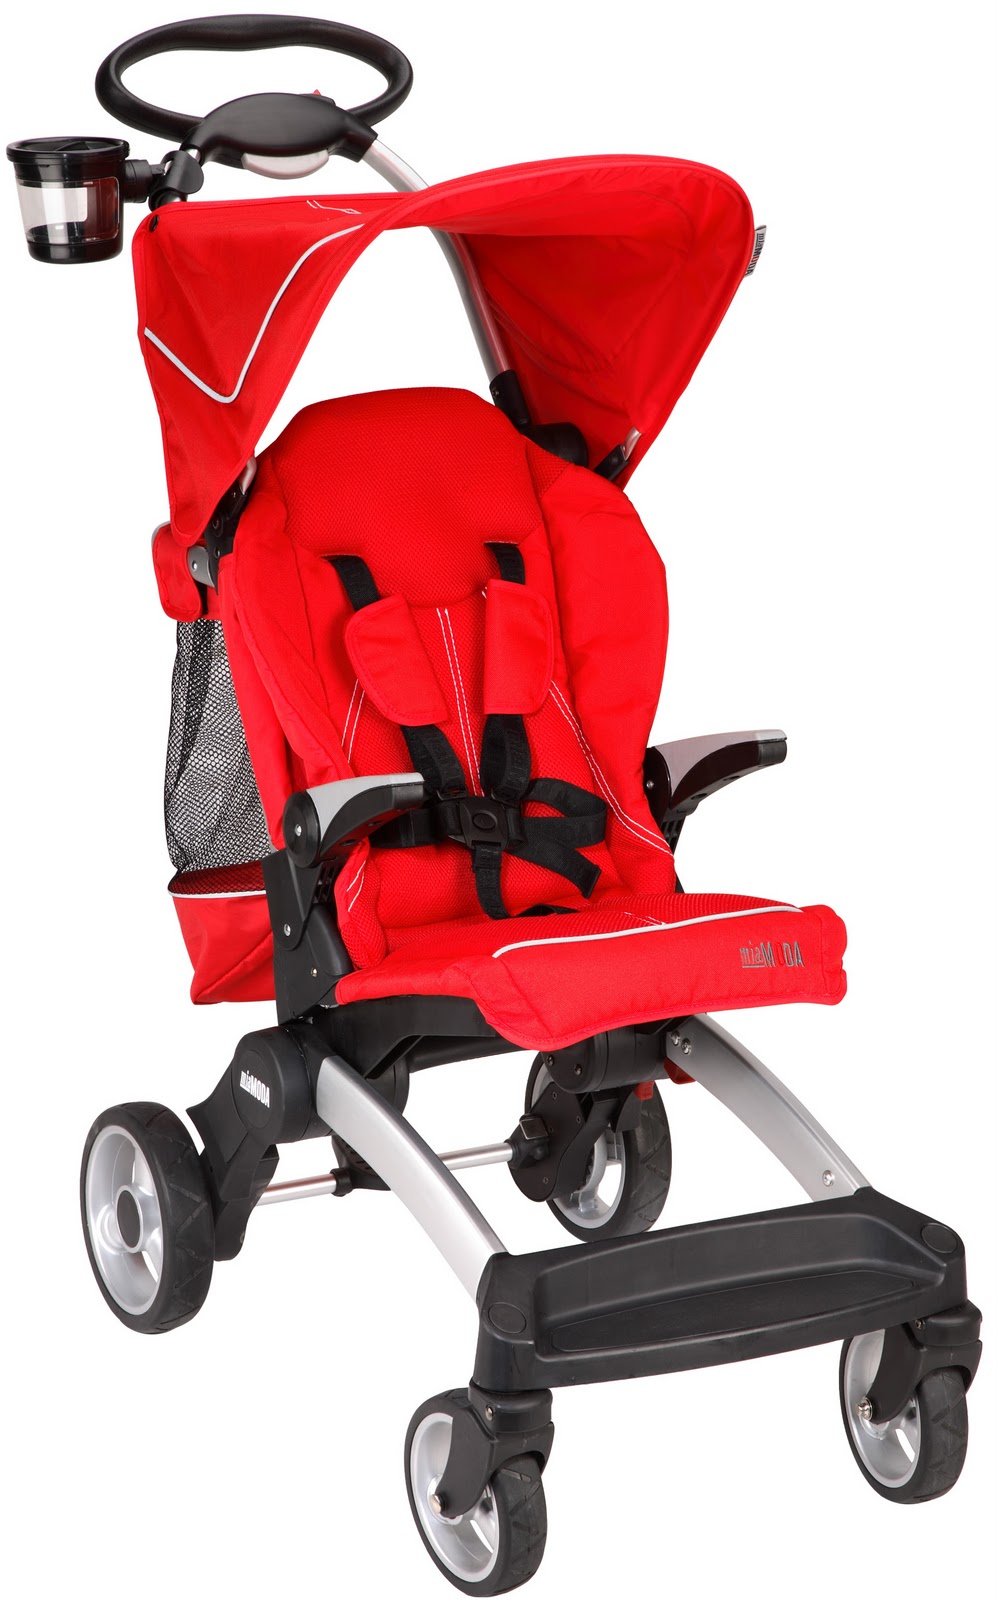 DIVINE BABY FURNITURE: Mia Moda Cielo Evolution Ultra Compact Stroller